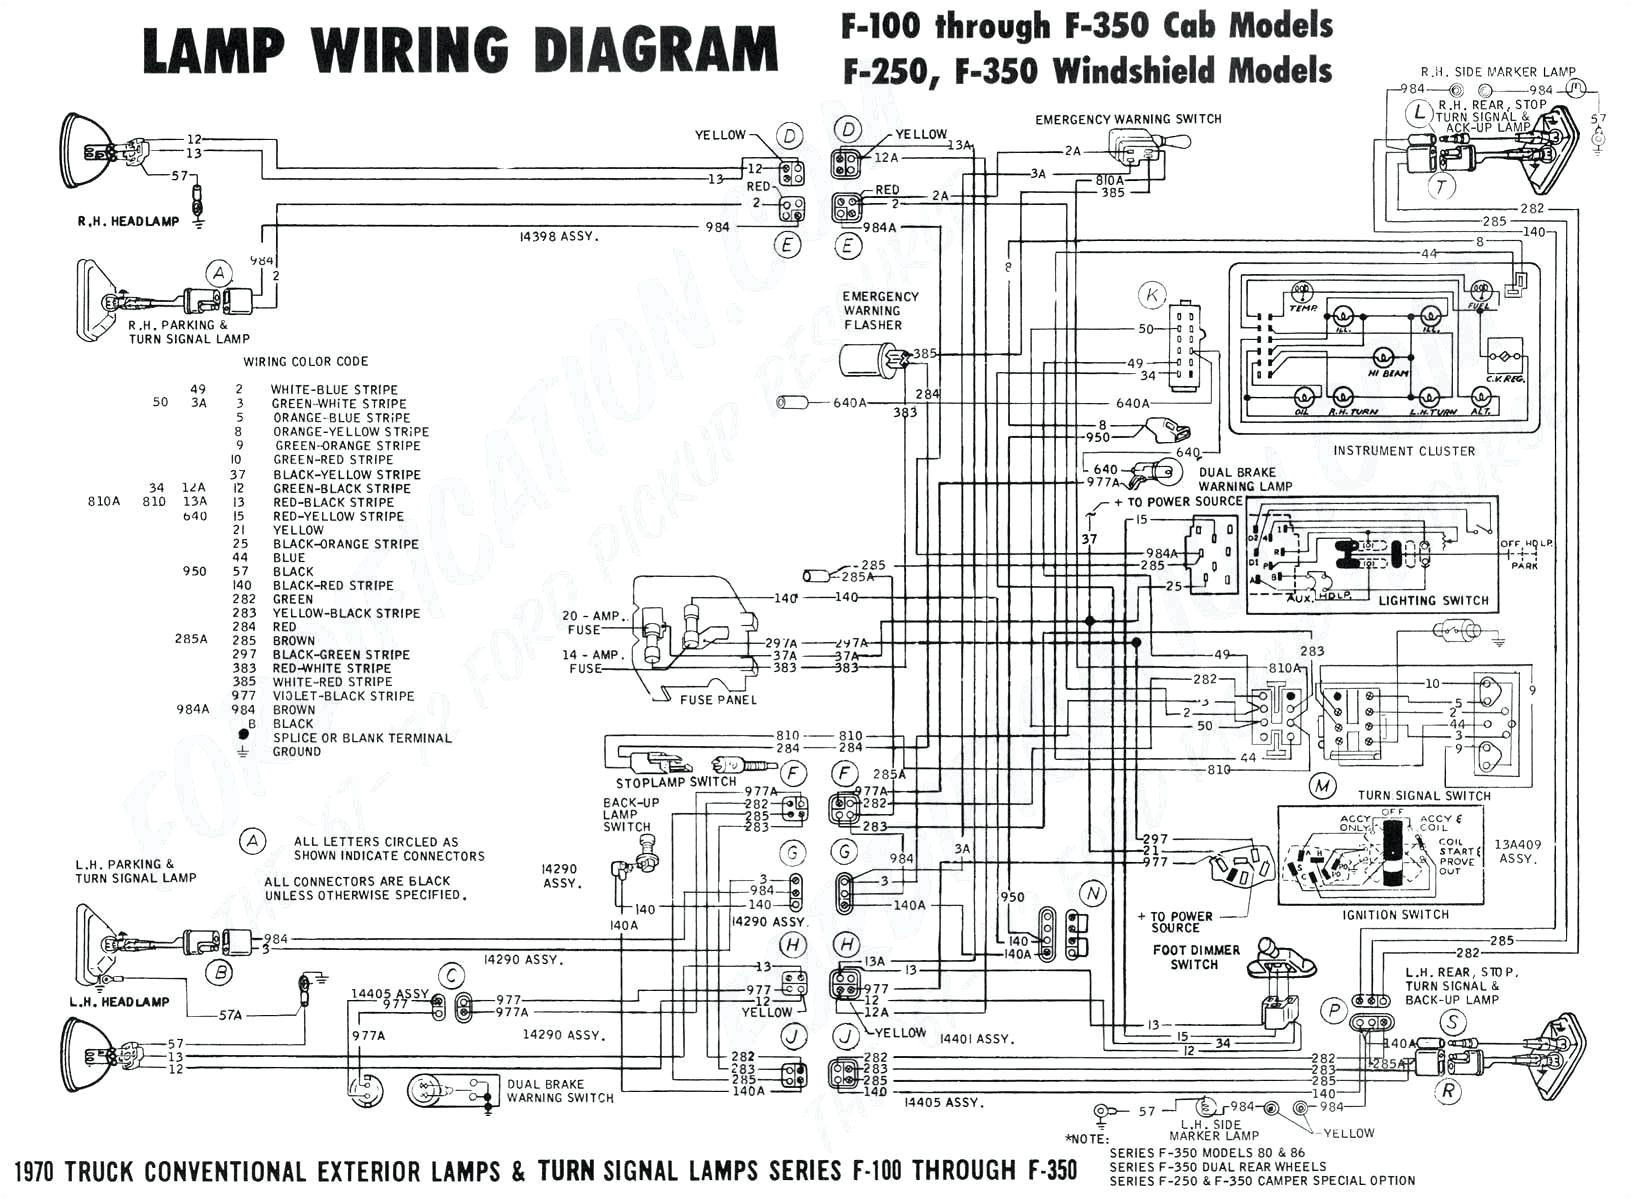 7 Pin Wiring Diagram Chevy 2005 Chevy Truck Wiring Diagram Wiring Diagram Database